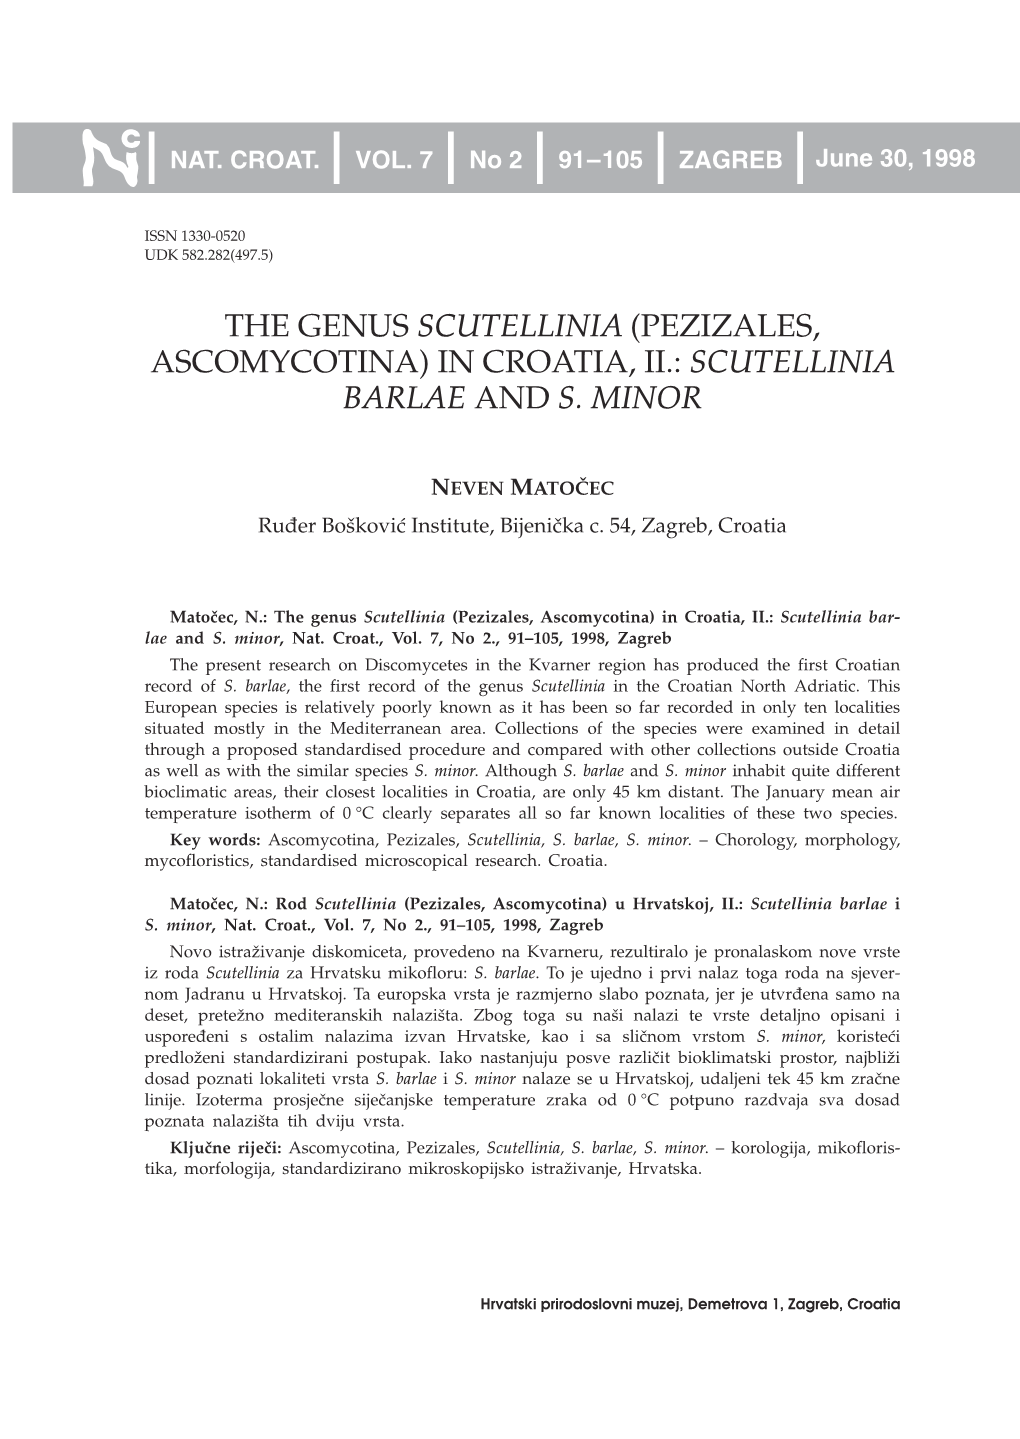 The Genus Scutellinia (Pezizales, Ascomycotina) in Croatia, Ii.: Scutellinia Barlae and S. Minor